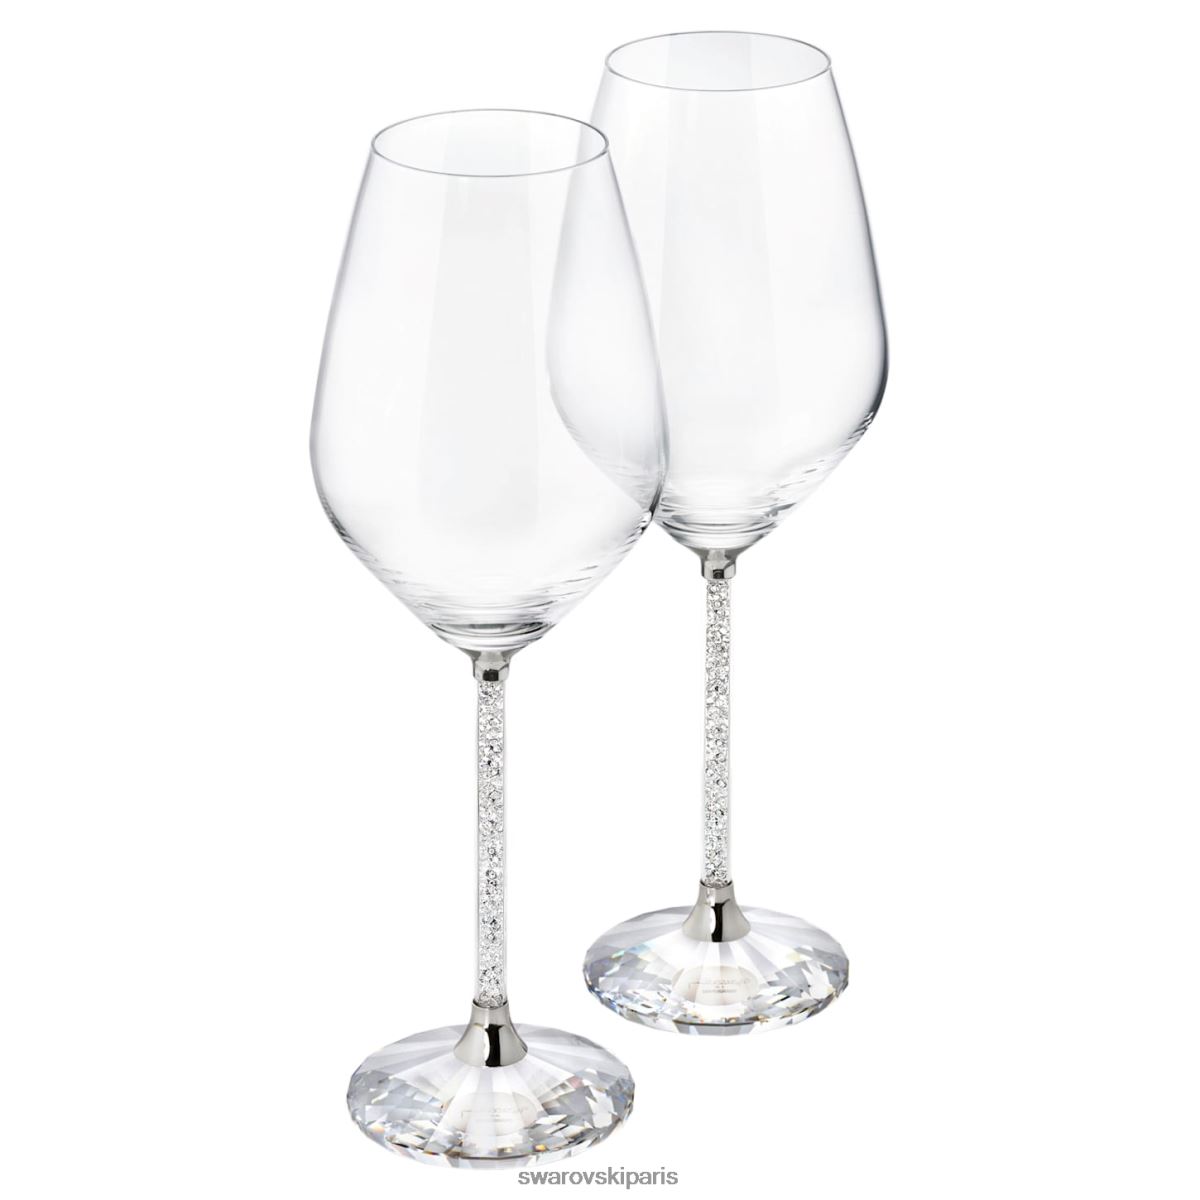 décorations Swarovski verres à vin blanc cristallin (set 2) collection RZD0XJ1747